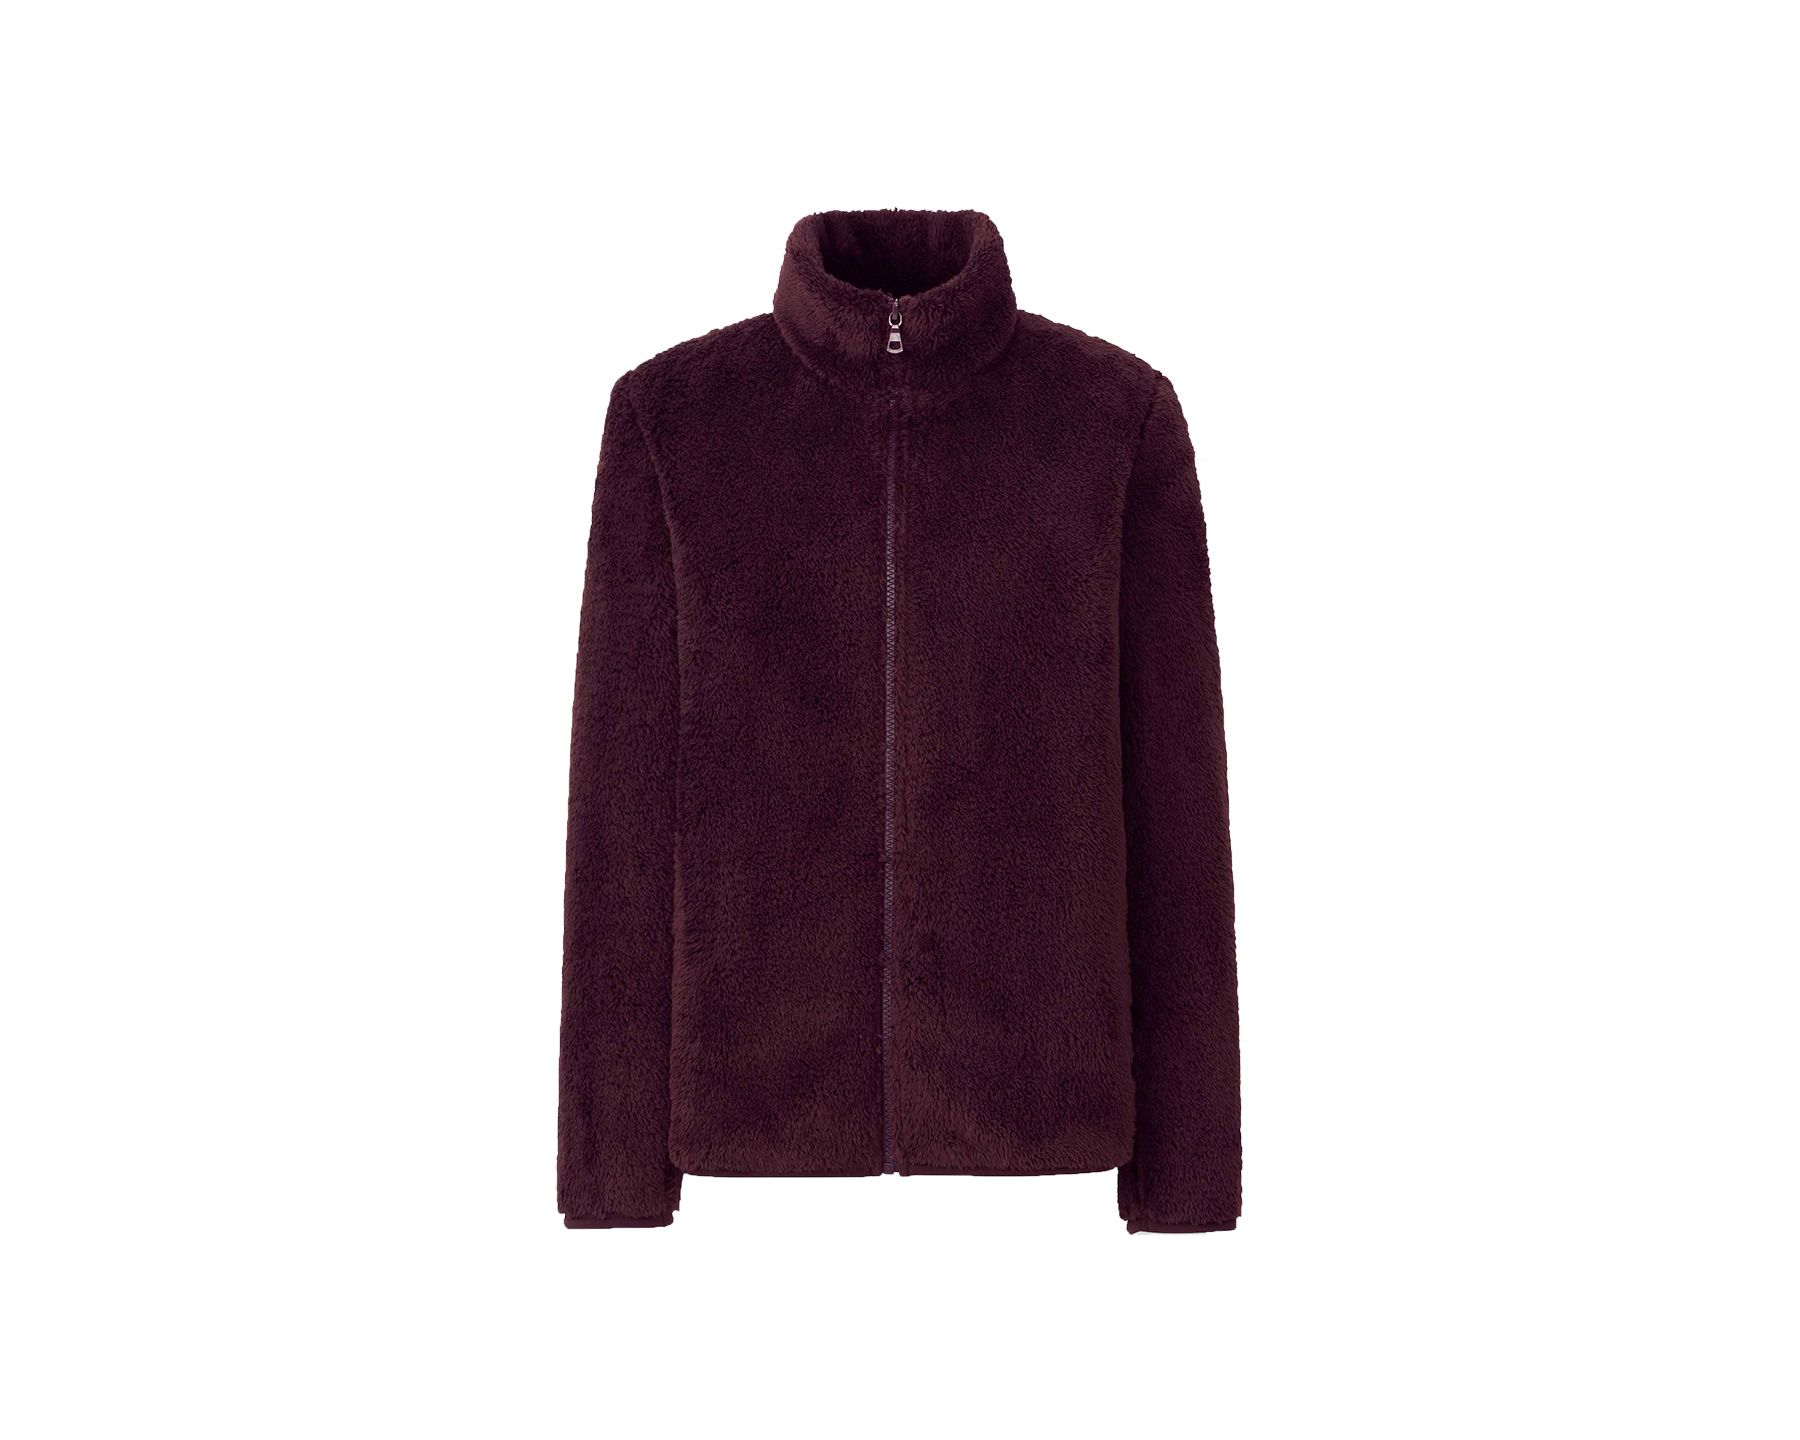 Uniqlo Fluffy Yarn Fleece Full-Zip Jacket